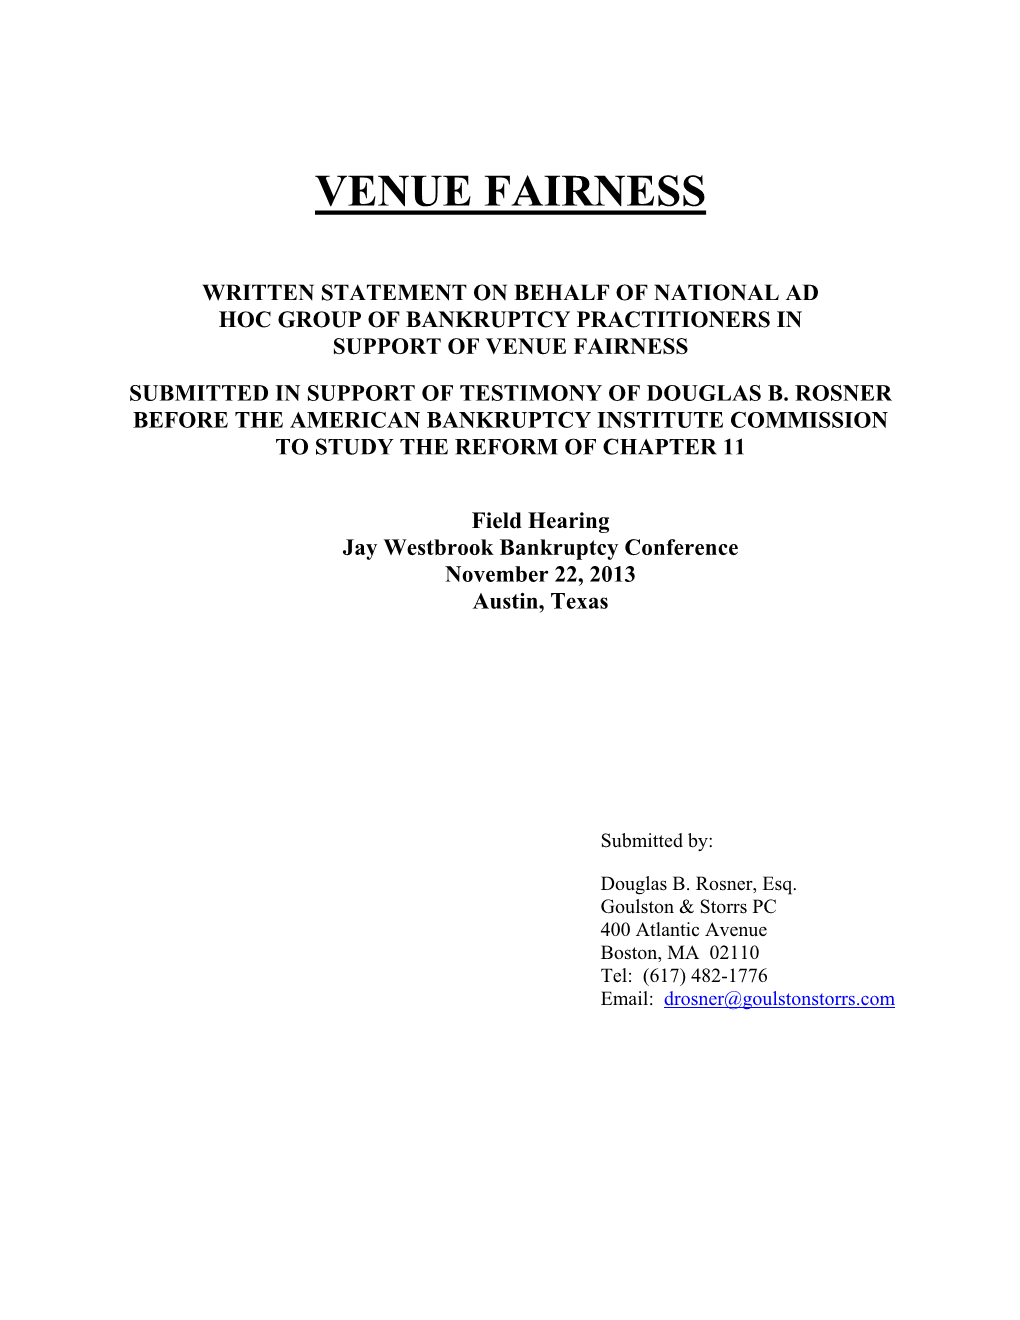 Venue Fairness Paper Rosner.Pdf